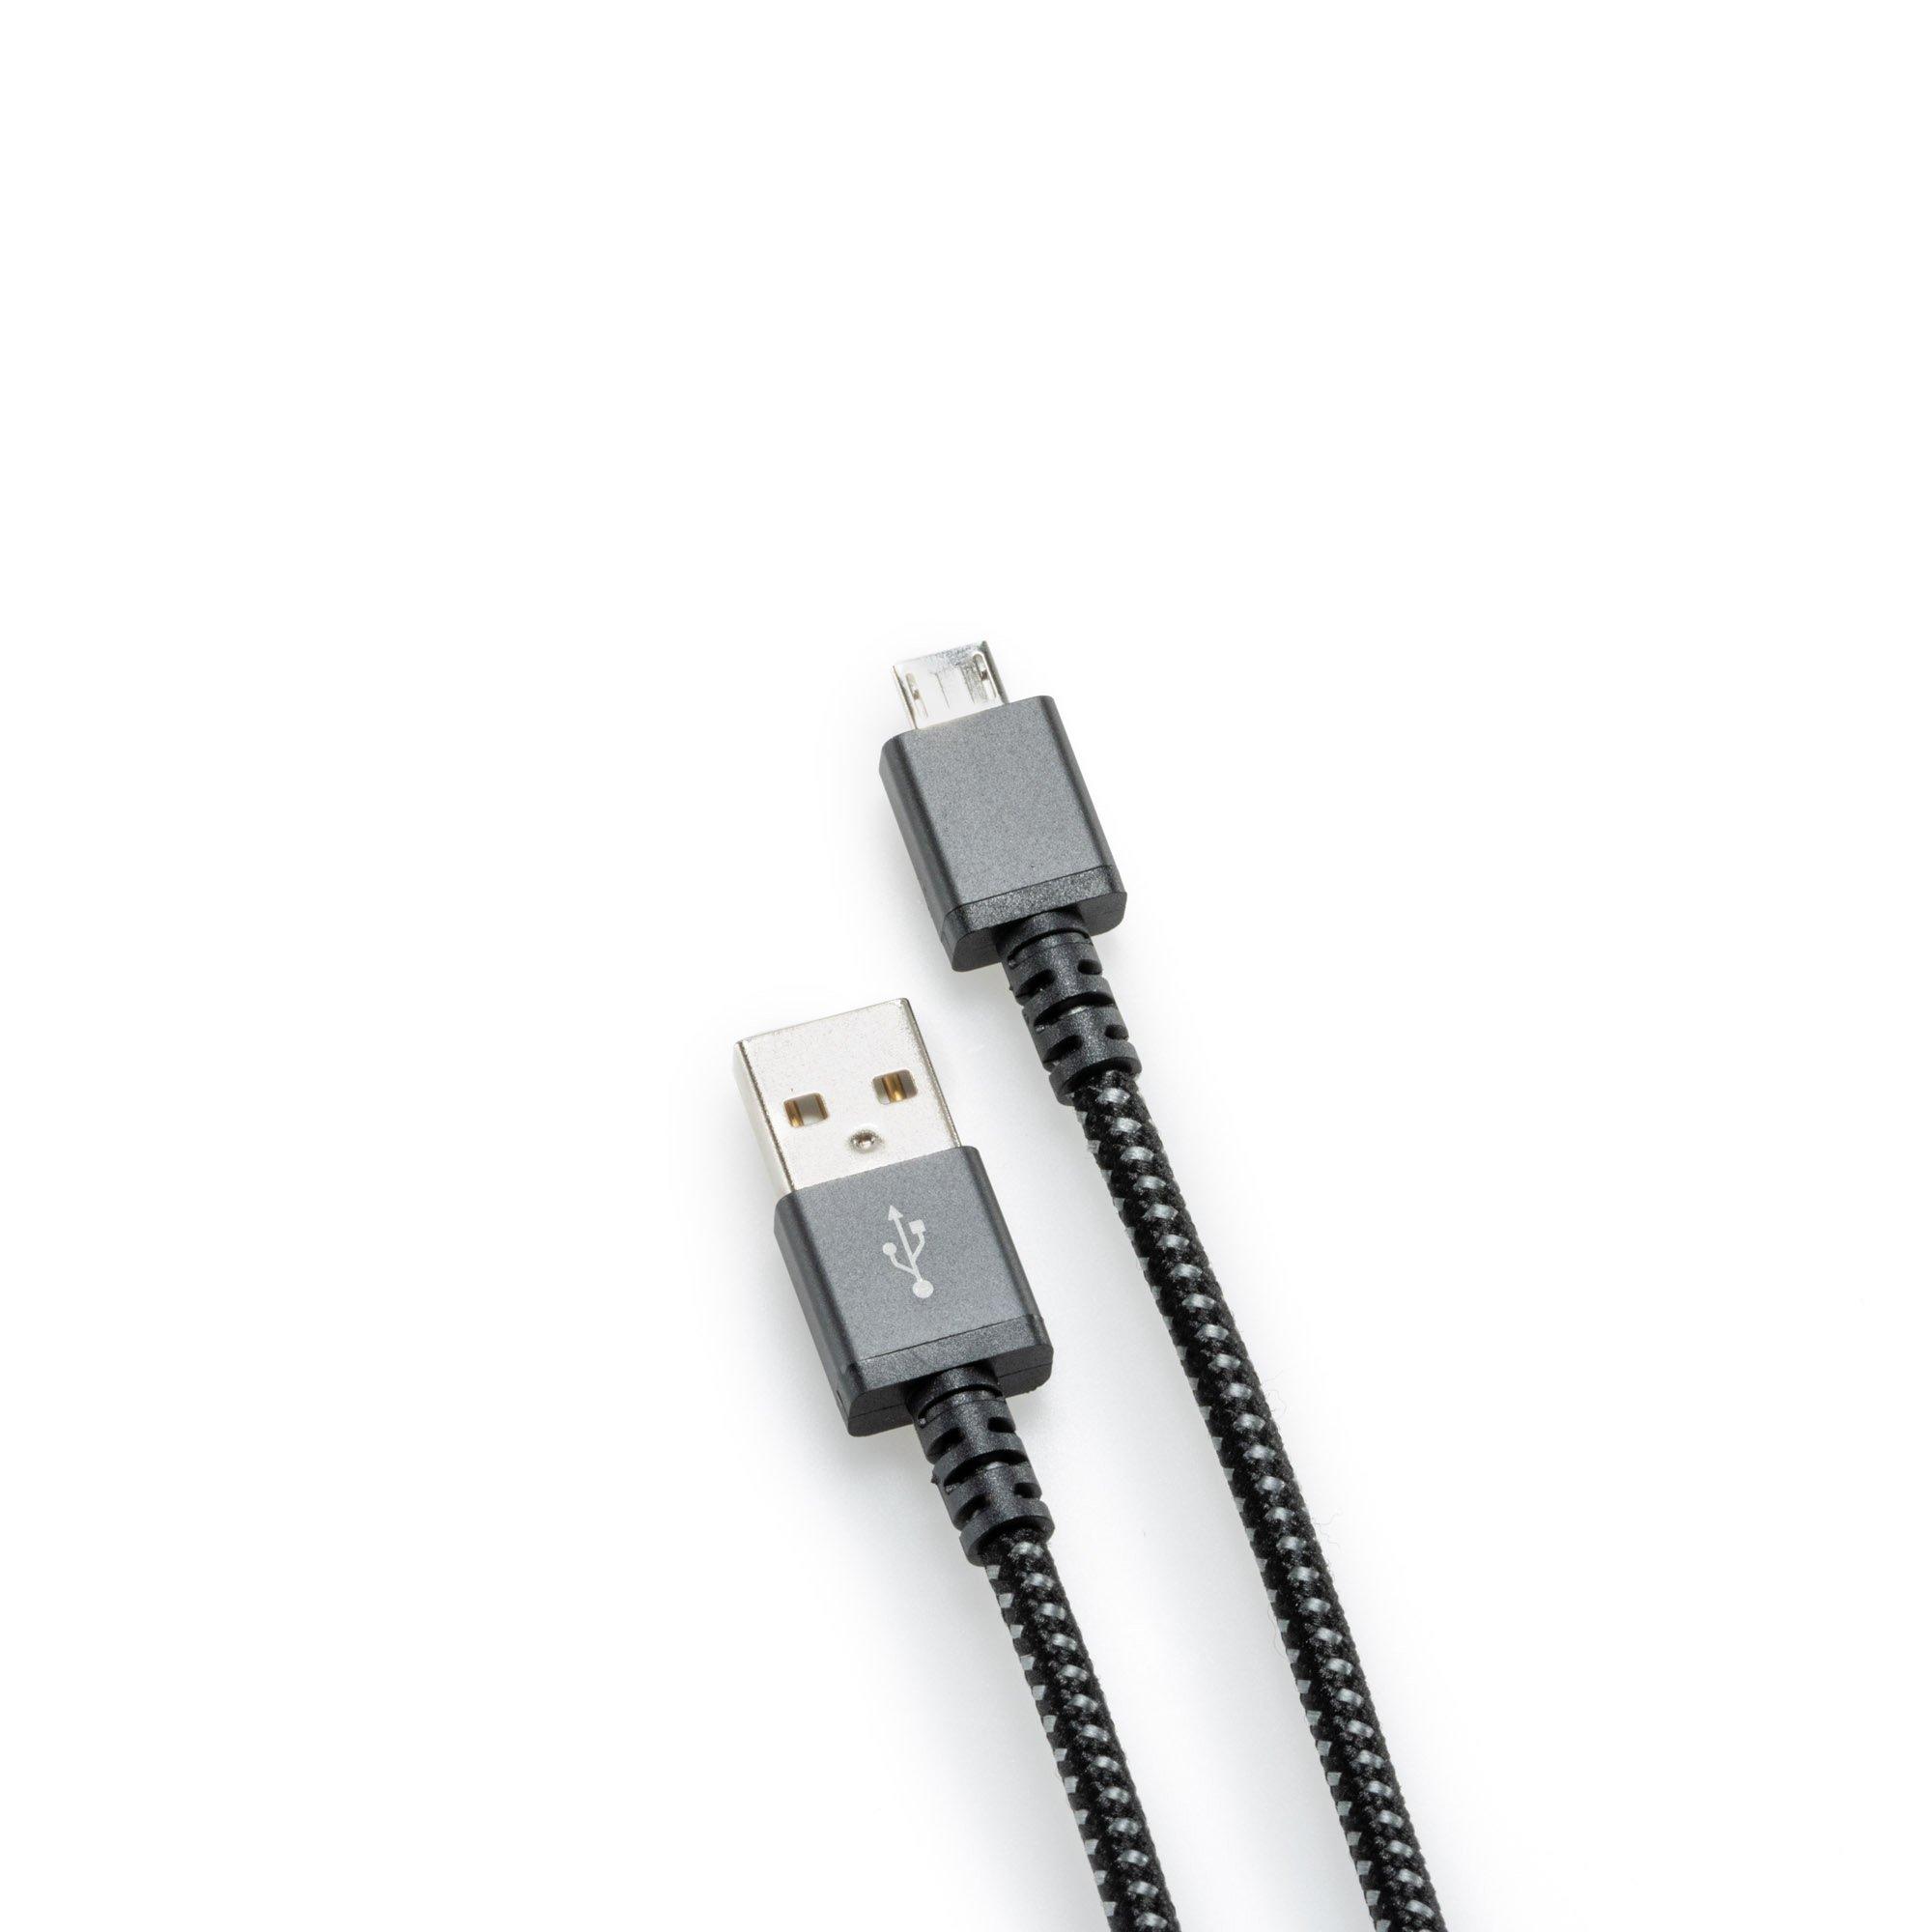 Atrix Universal USB to Micro USB Cord